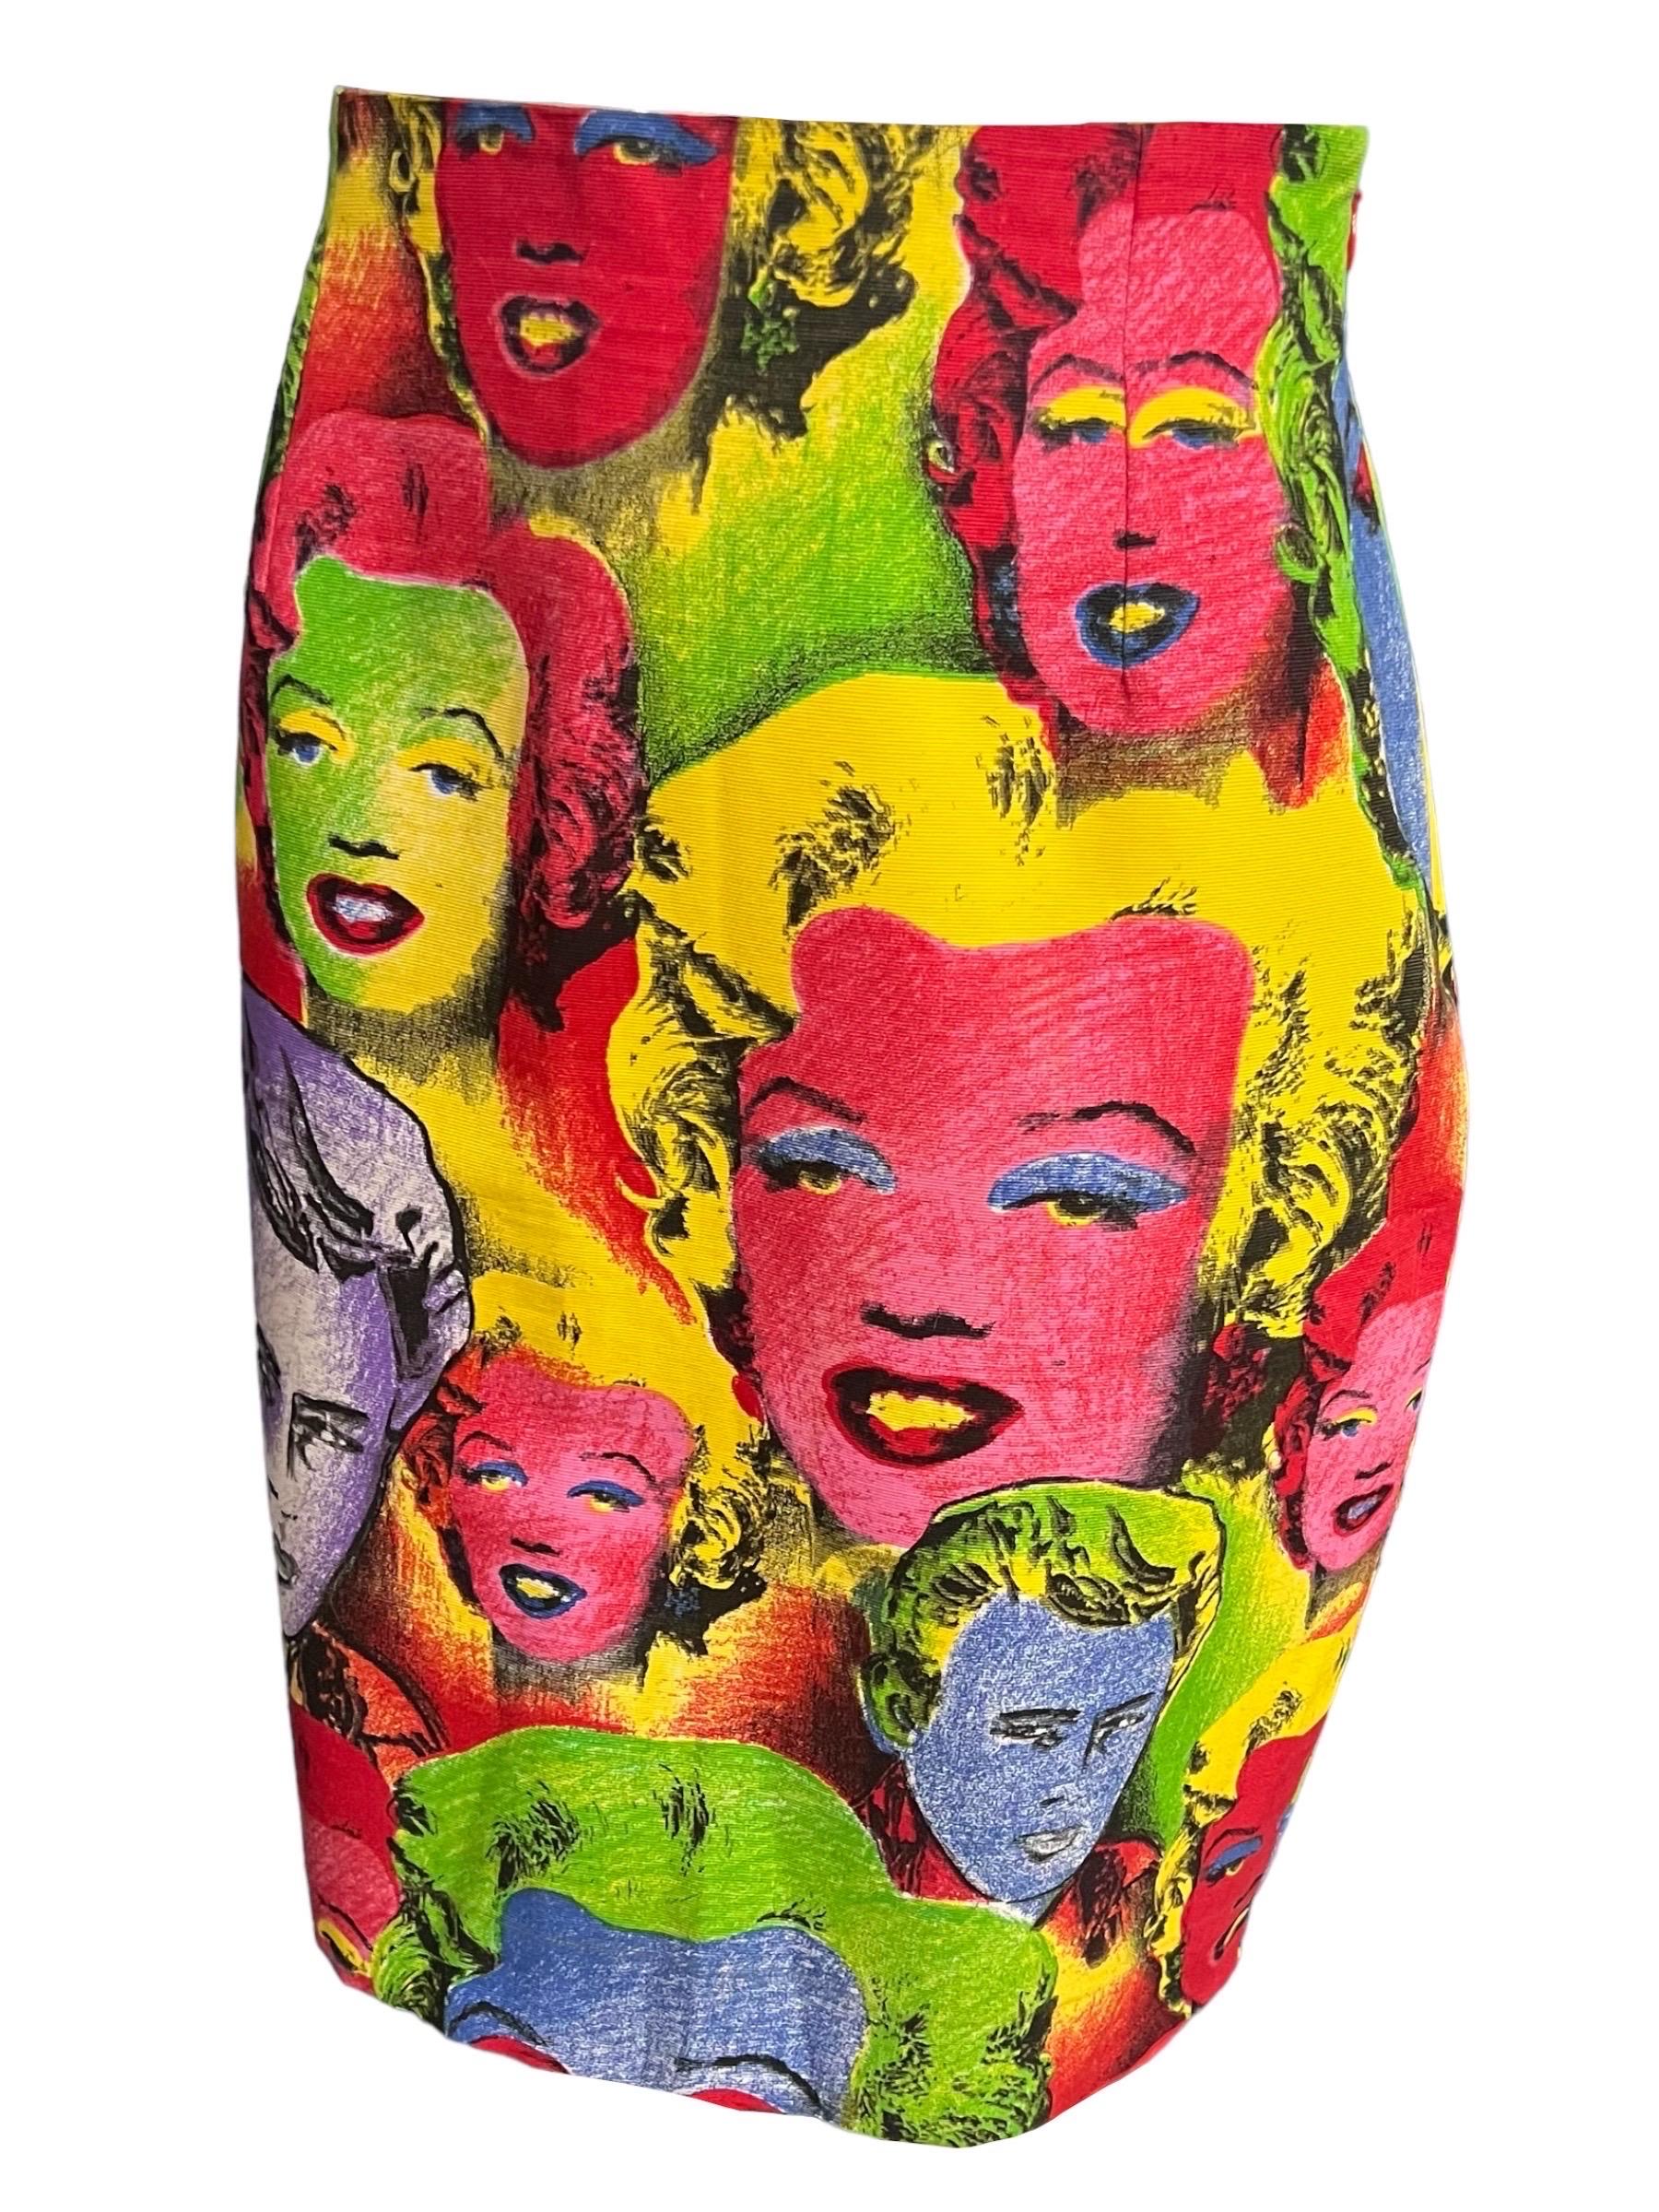 S/S 1991 Gianni Versace Marilyn Monroe James Dean Warhol Printed Skirt For Sale 1